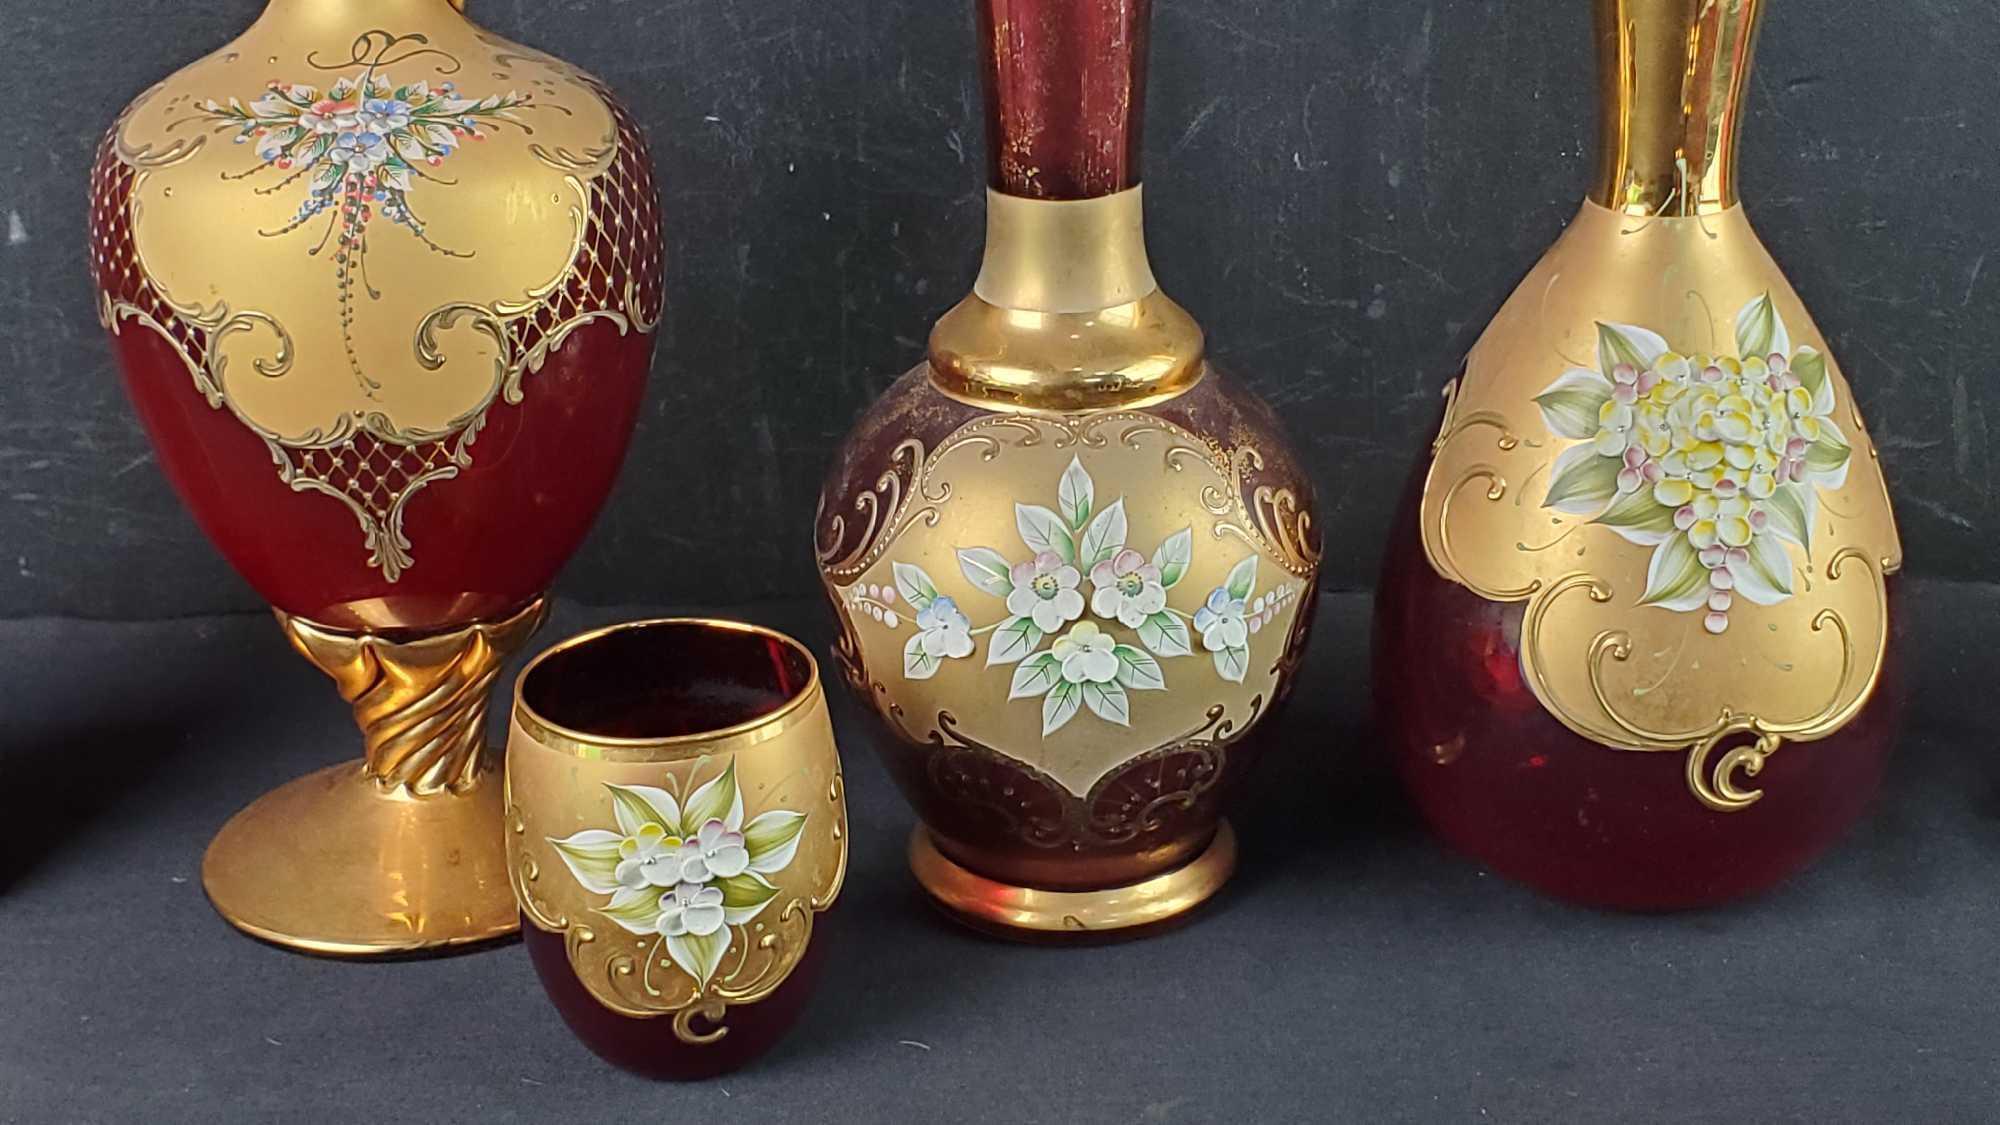 Lot of vintage Murano carafes decanters venetian vases bottles glasses etc.